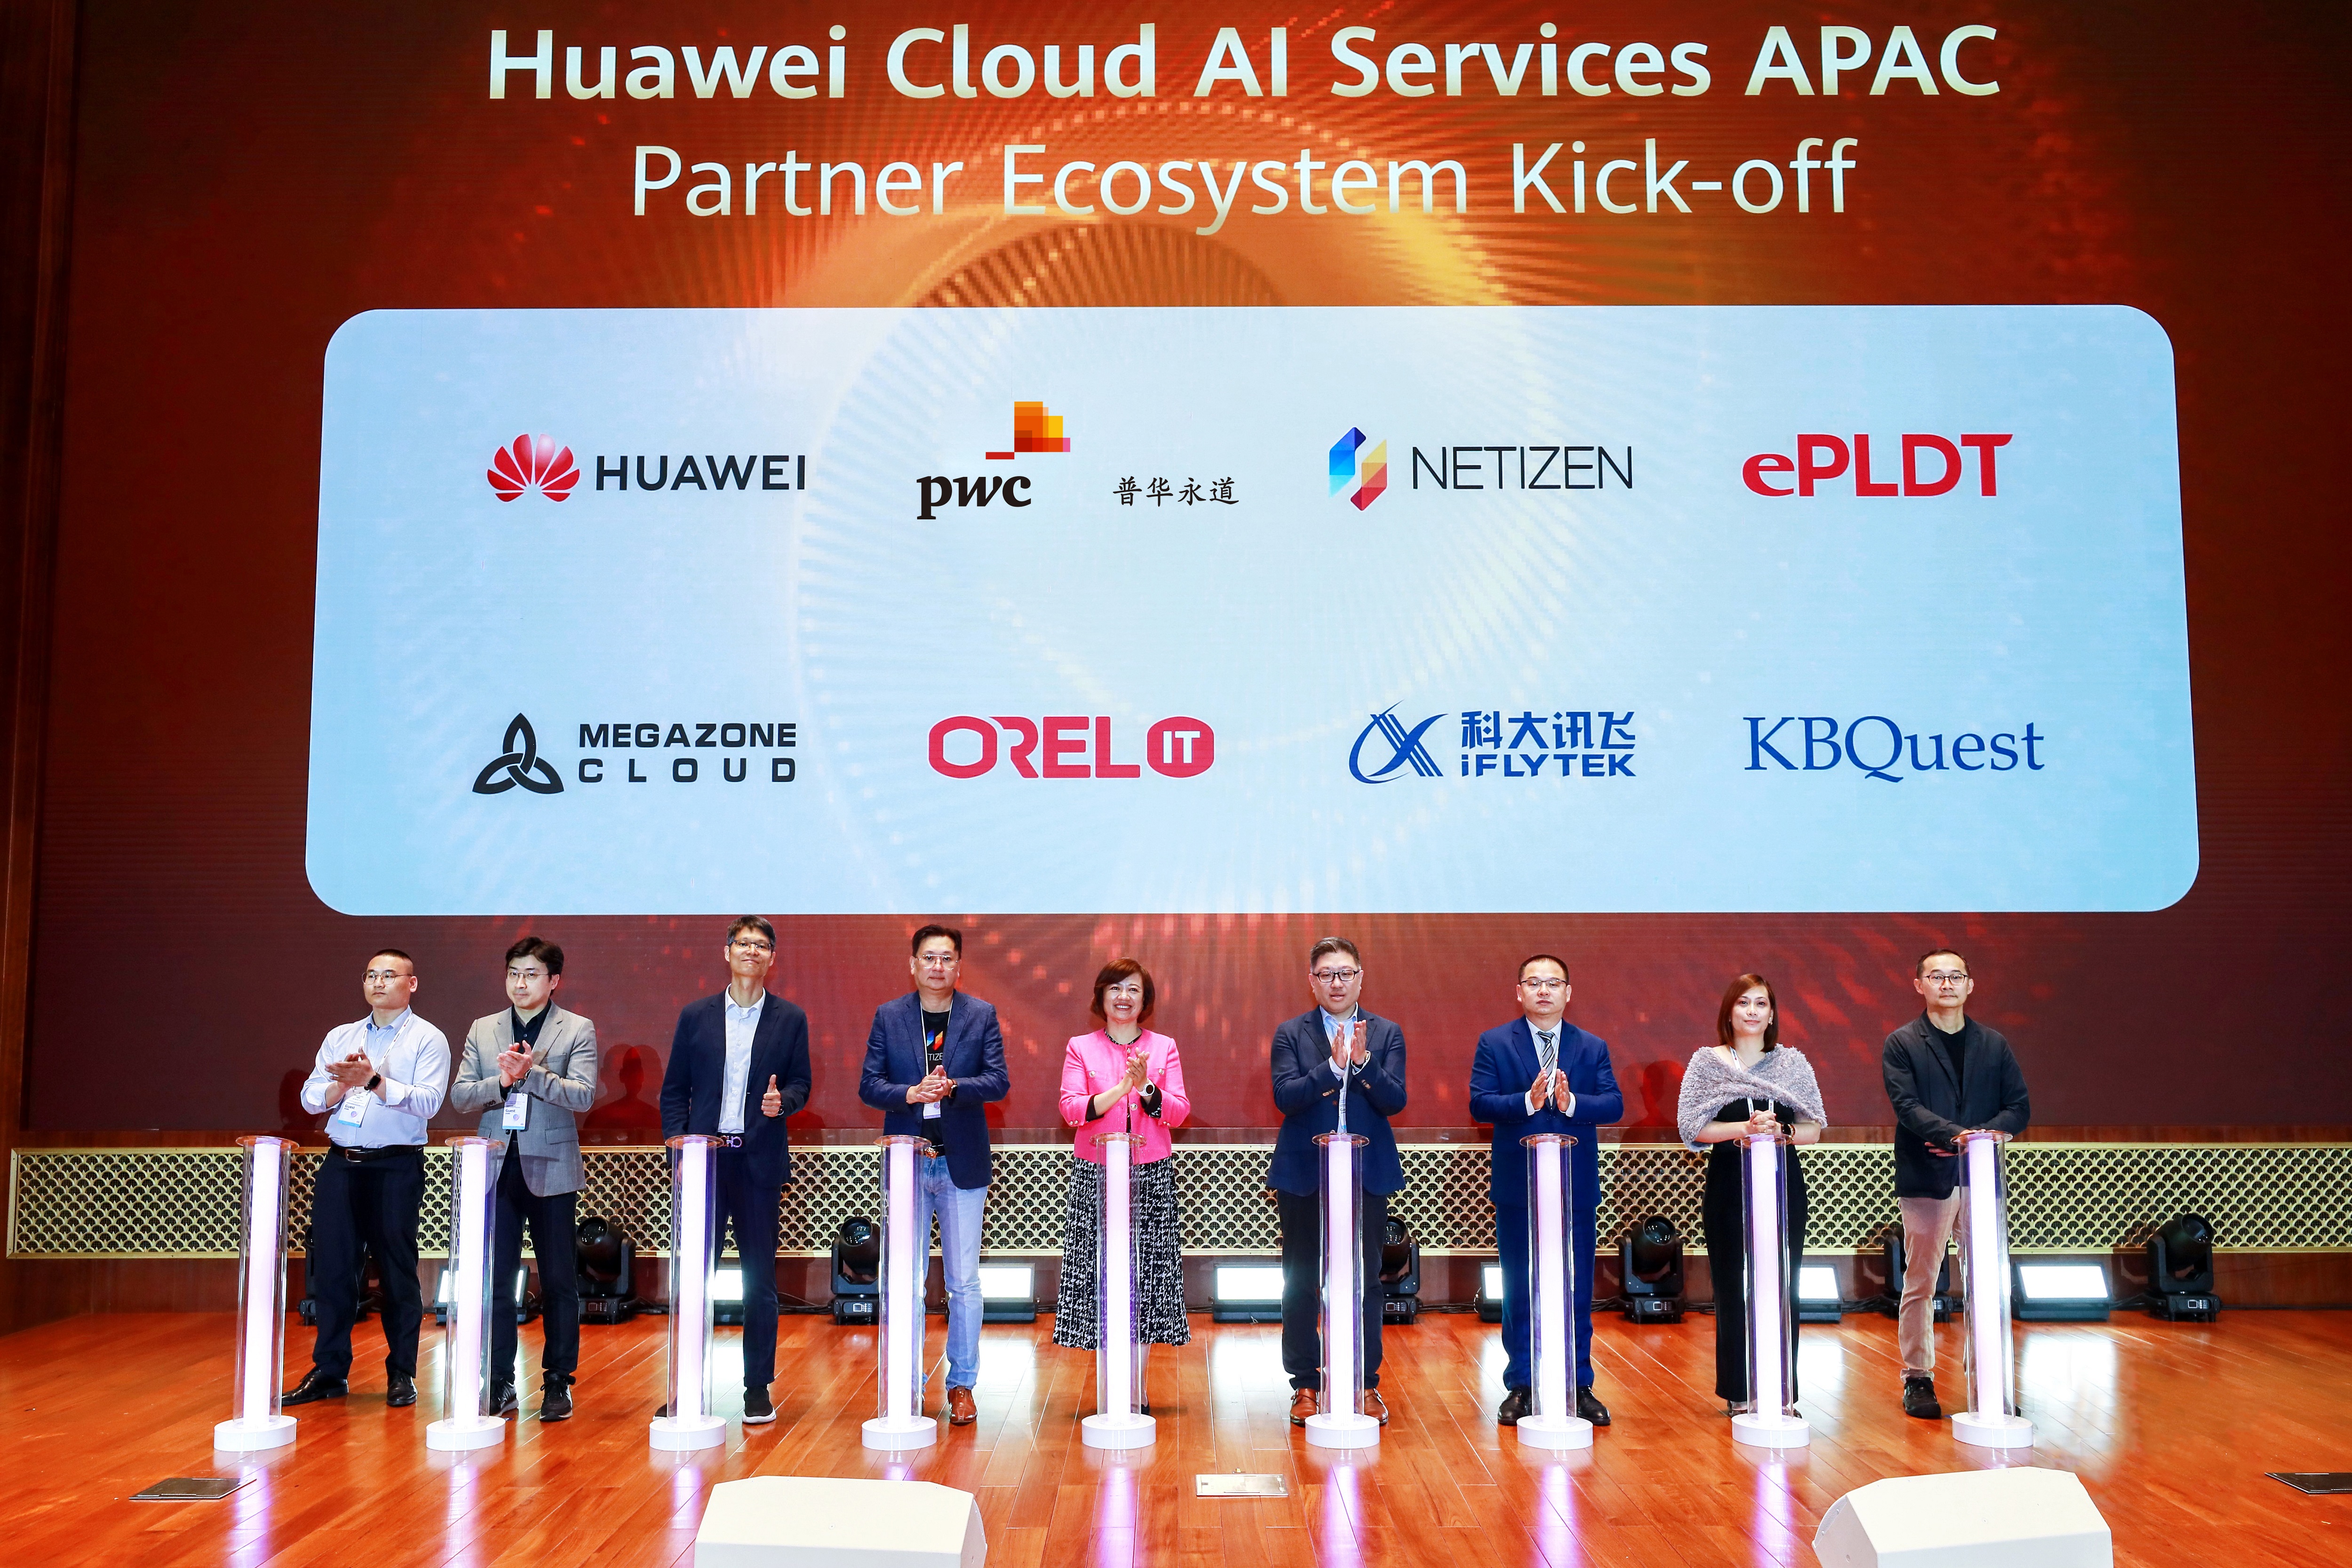 Huawei Cloud AI Services APAC Partner Ecosystem Kick-off